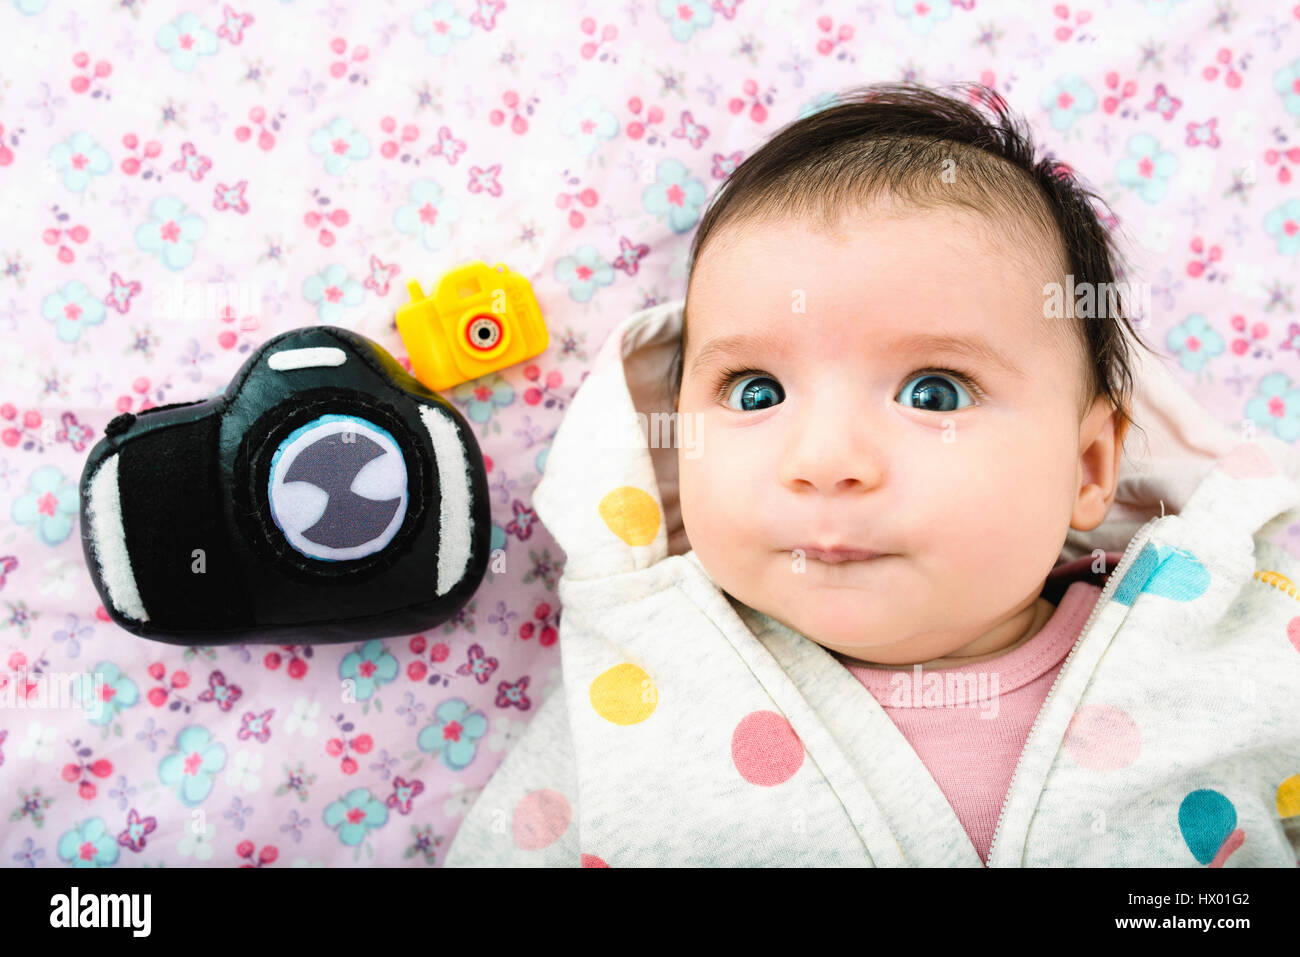 Portrait of baby girl lying on bed avec deux caméras jouets Banque D'Images